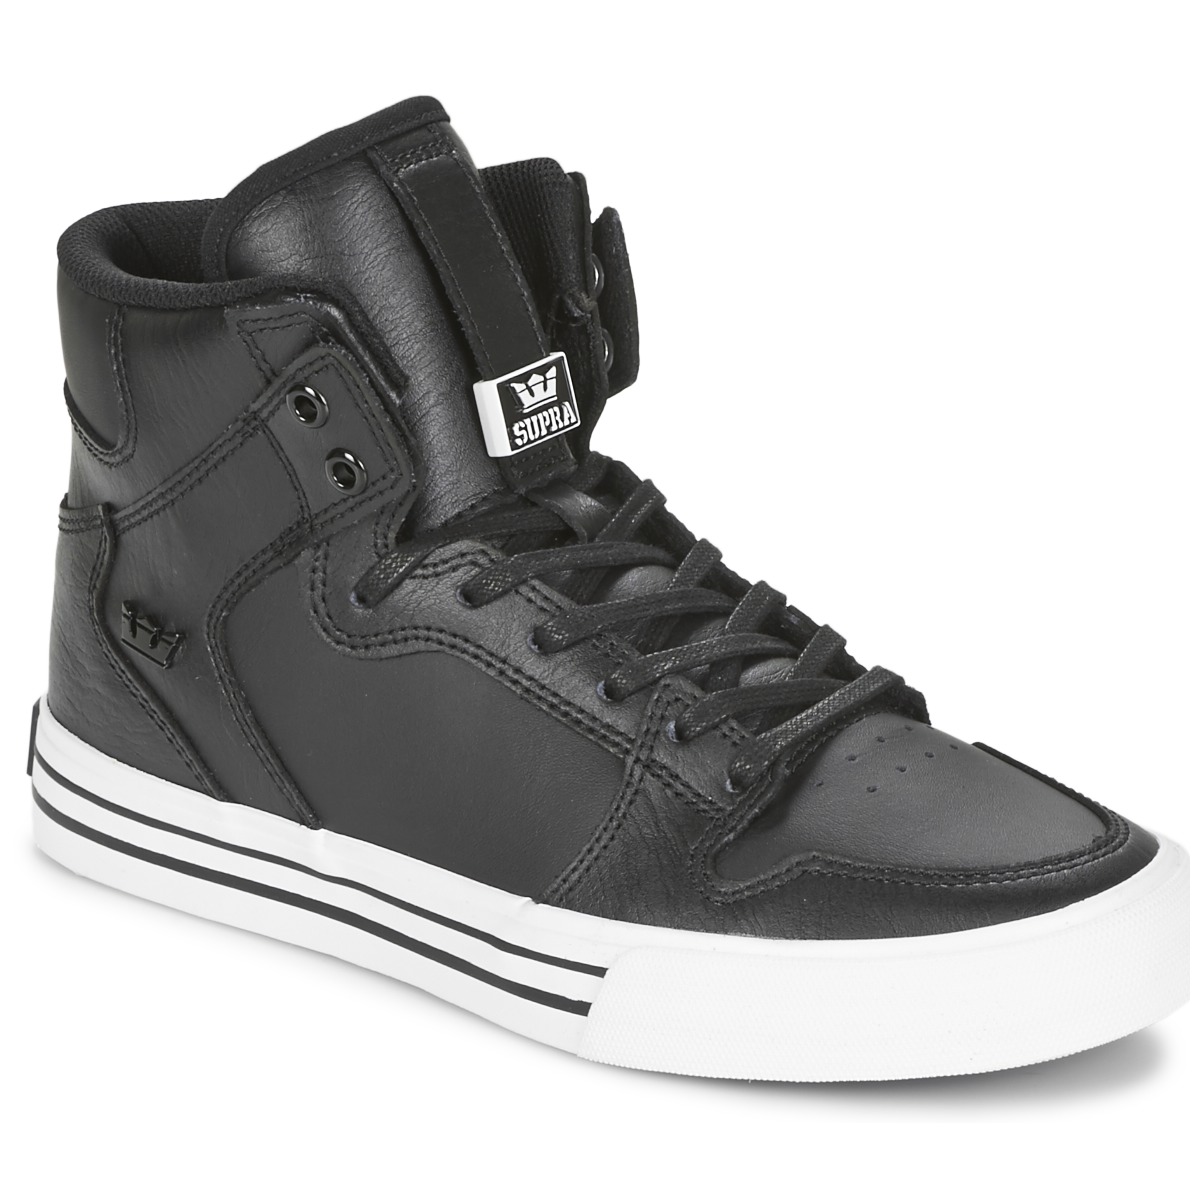 Shoes Hi top trainers Supra VAIDER CLASSIC Black / White